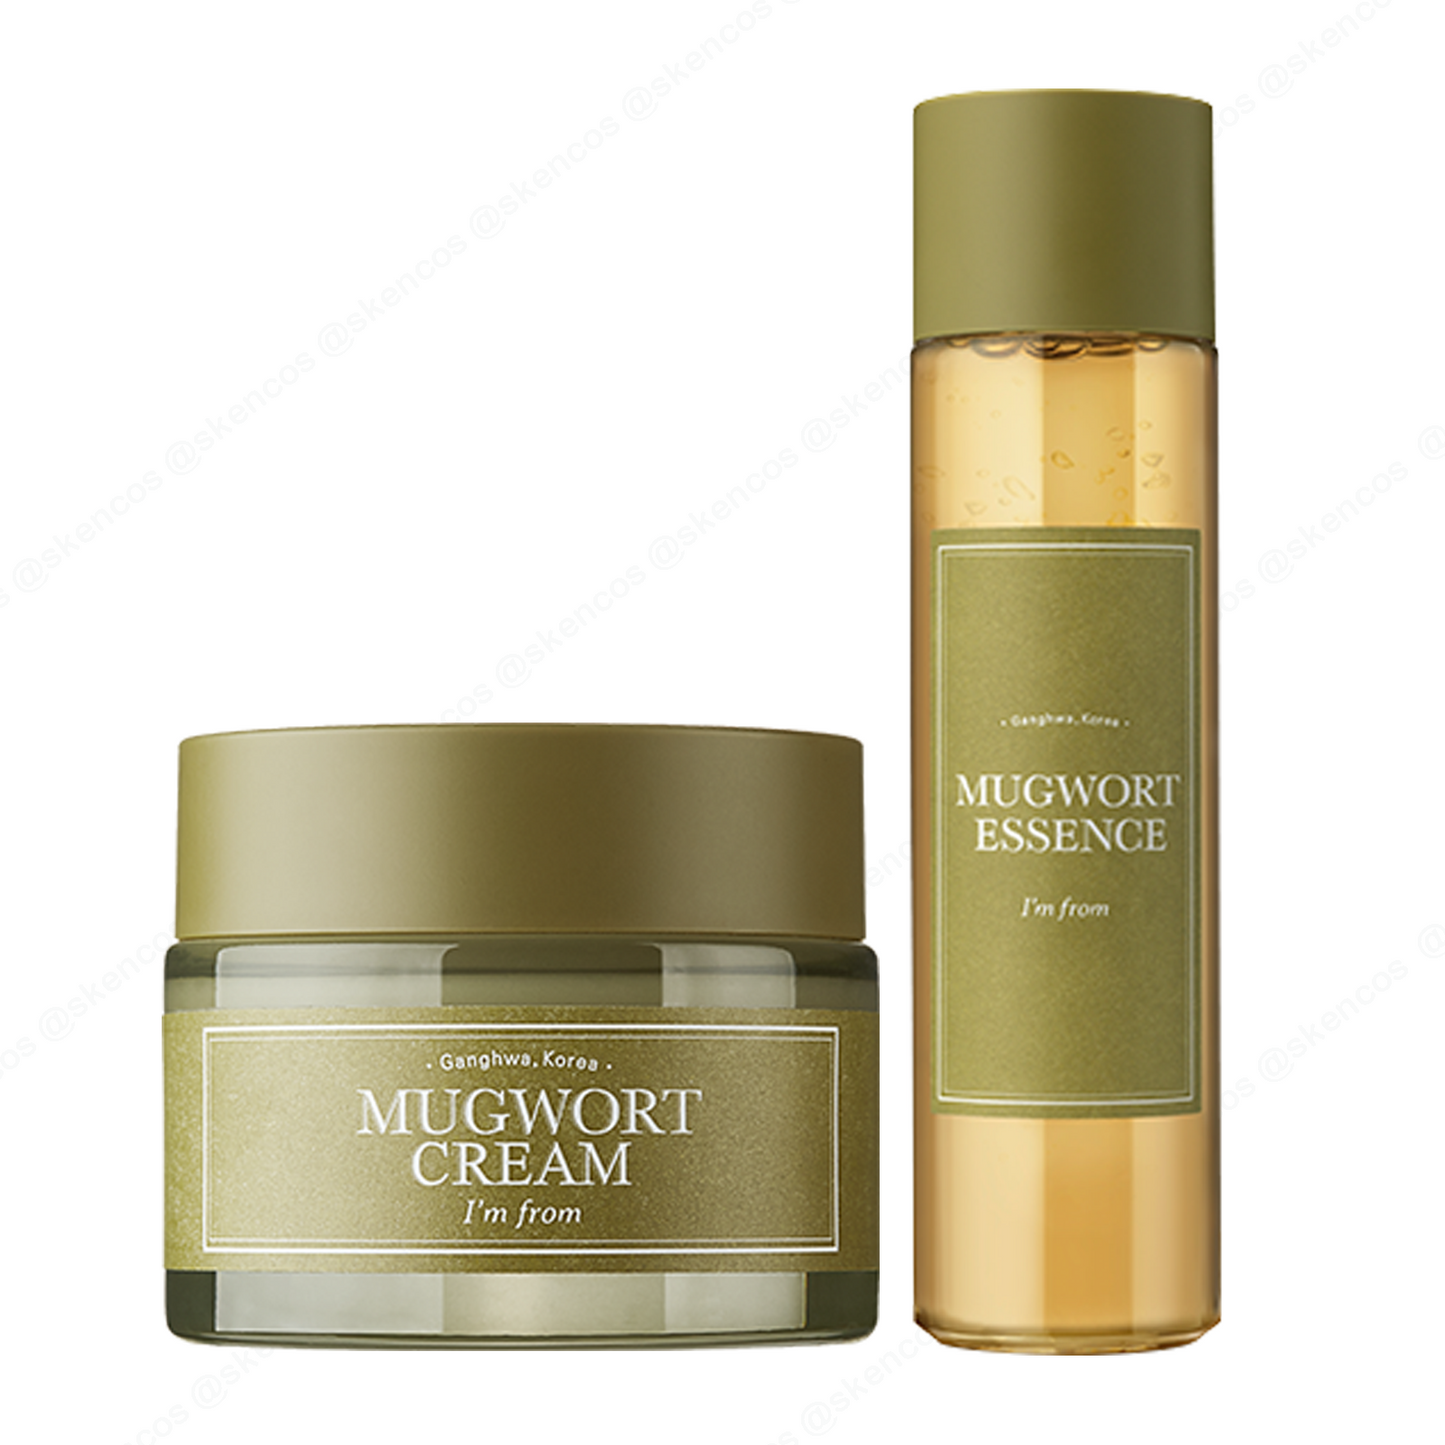 I'm from Mugwort Cream 50g /1.76 oz./hydration/Skin irritation tested/mild cream